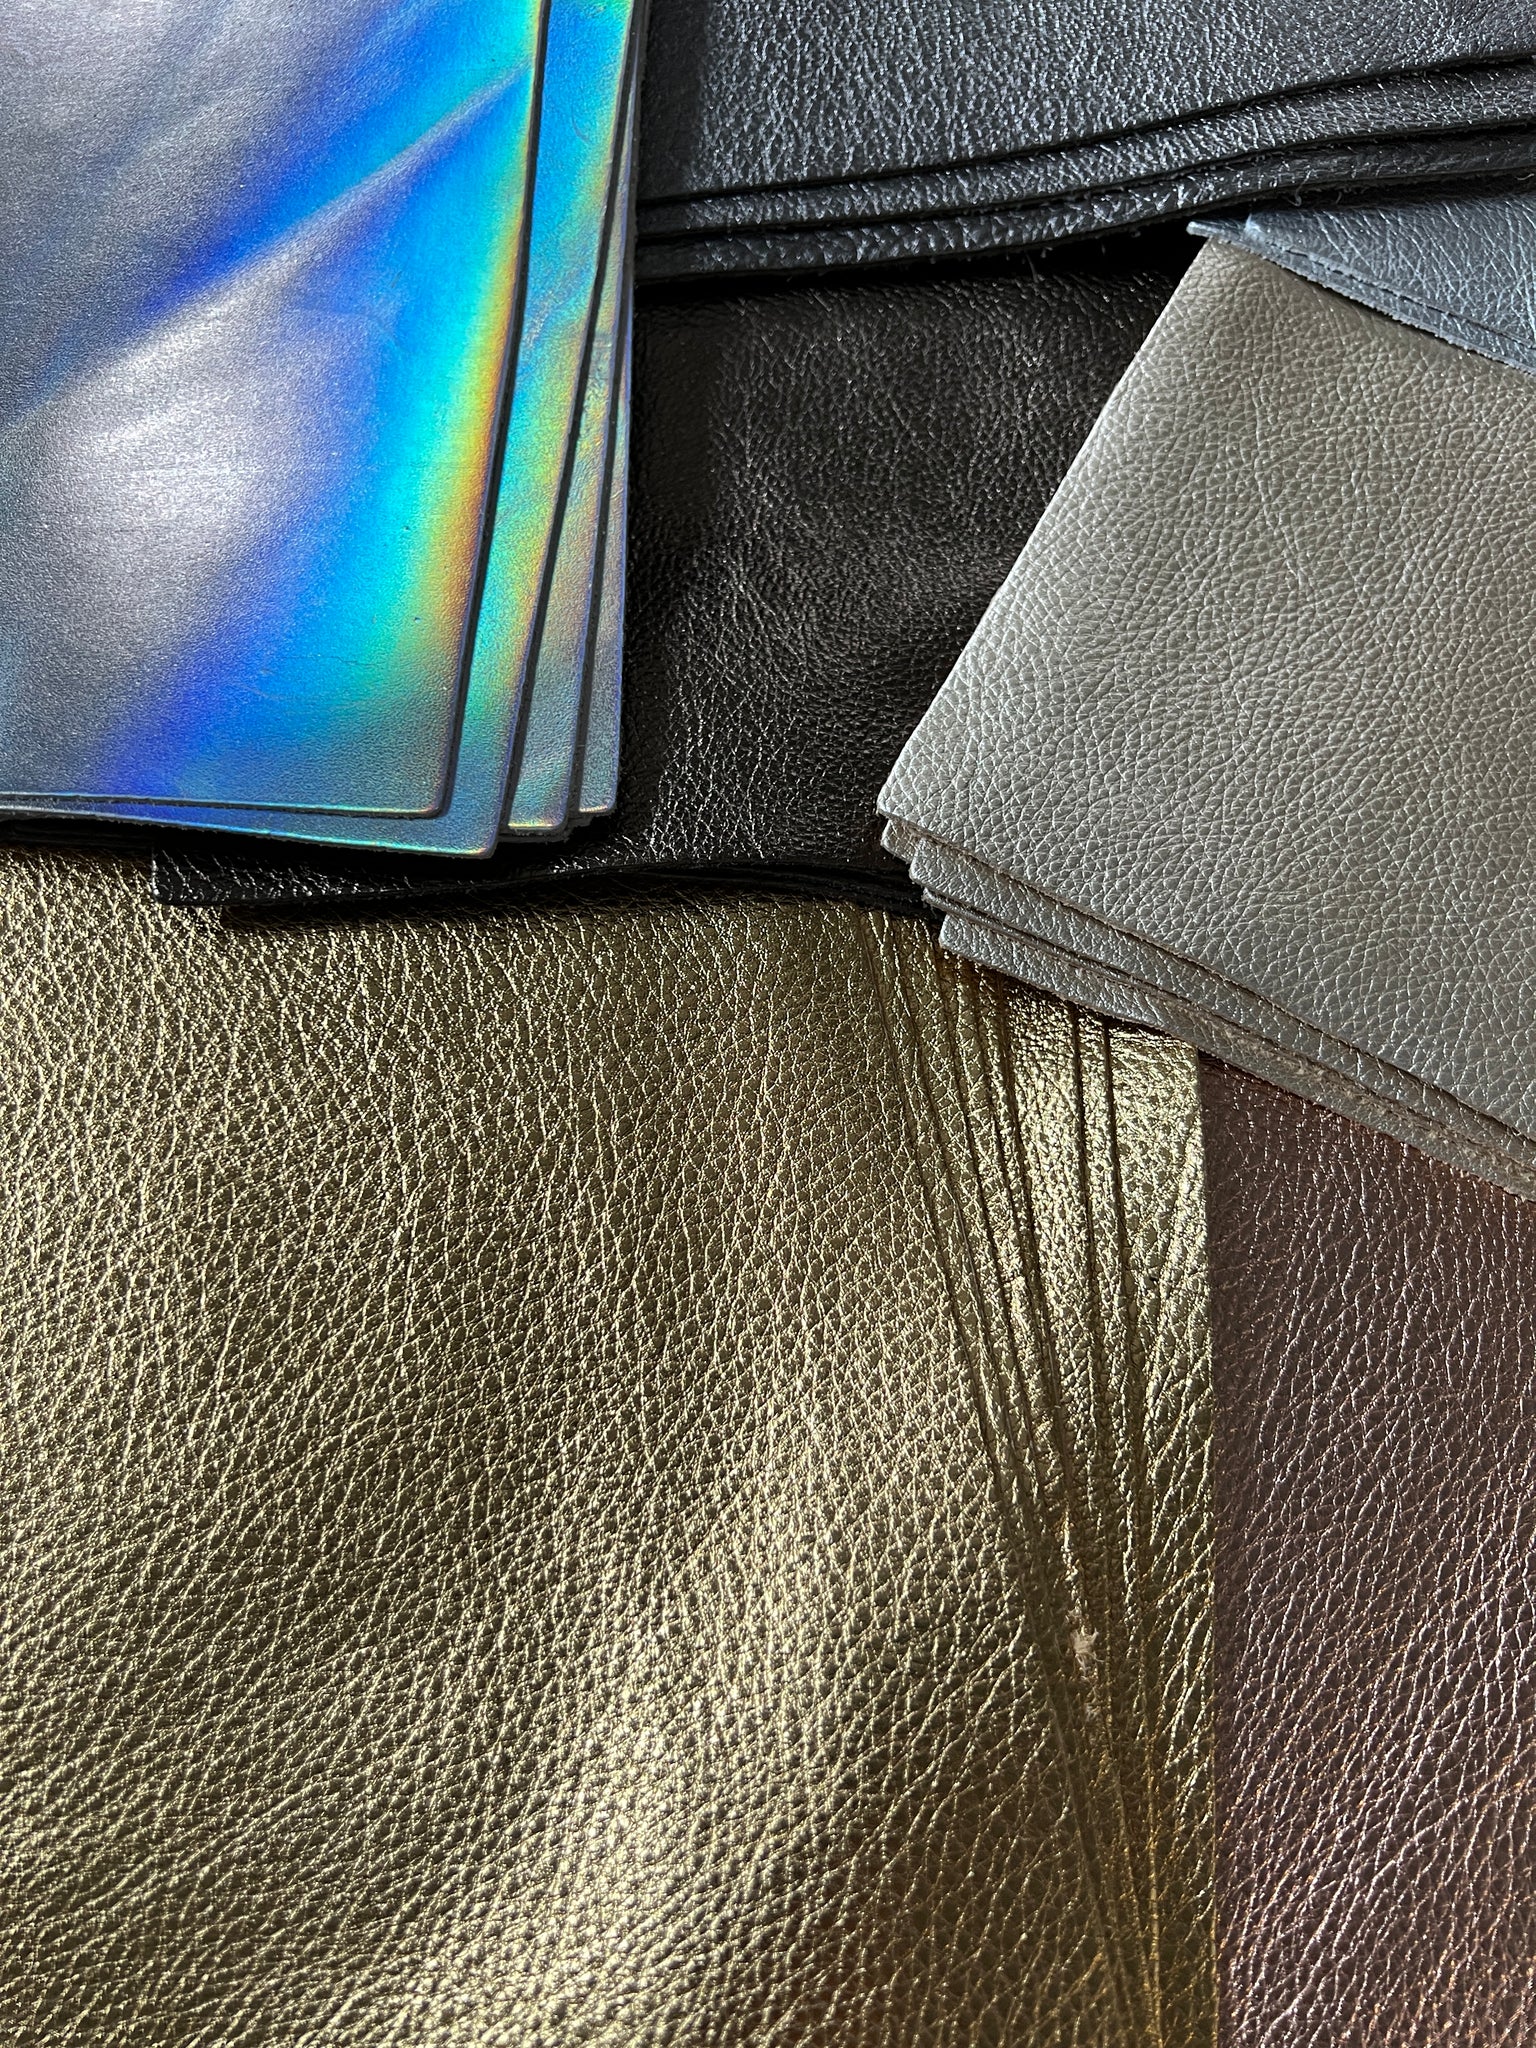 Natural Grain Metallic Cowhide Leather Bundle: 6 Pack - 8.5'' x 11'' Craft Pre-Cut Panels!